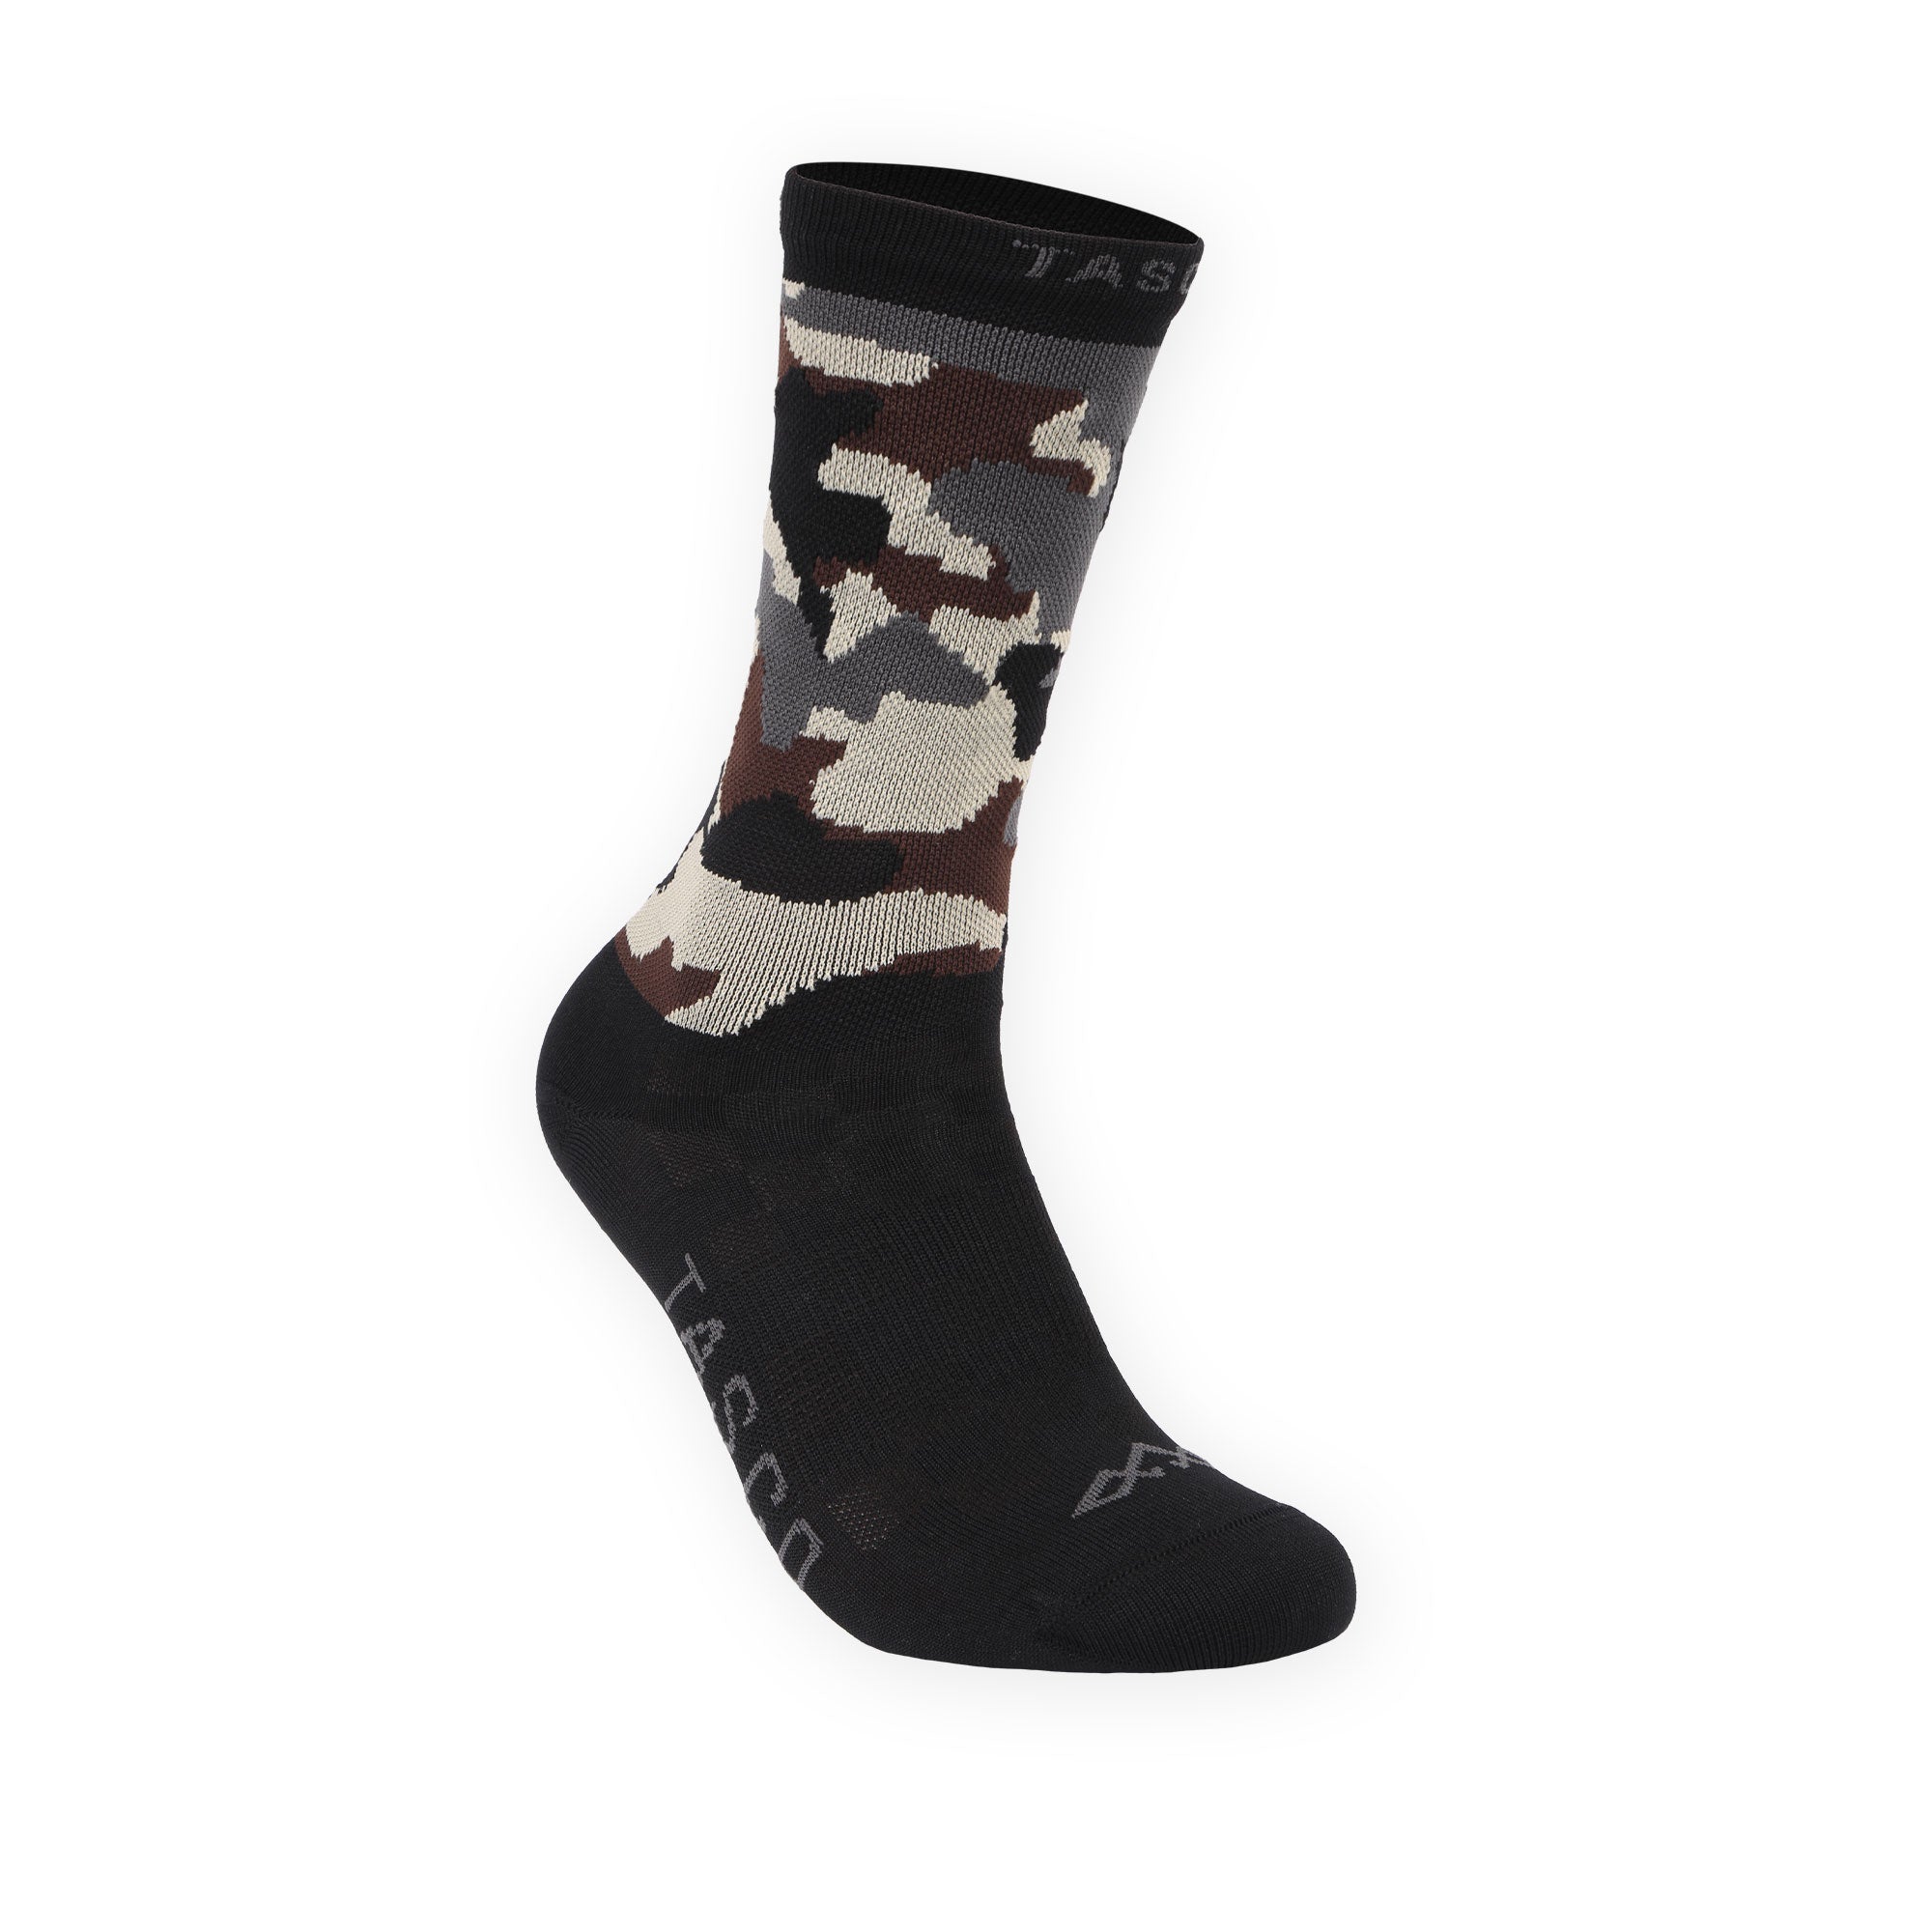 TASCO MTB Surplus Socks - Desert Camo grey, black, brown camo design